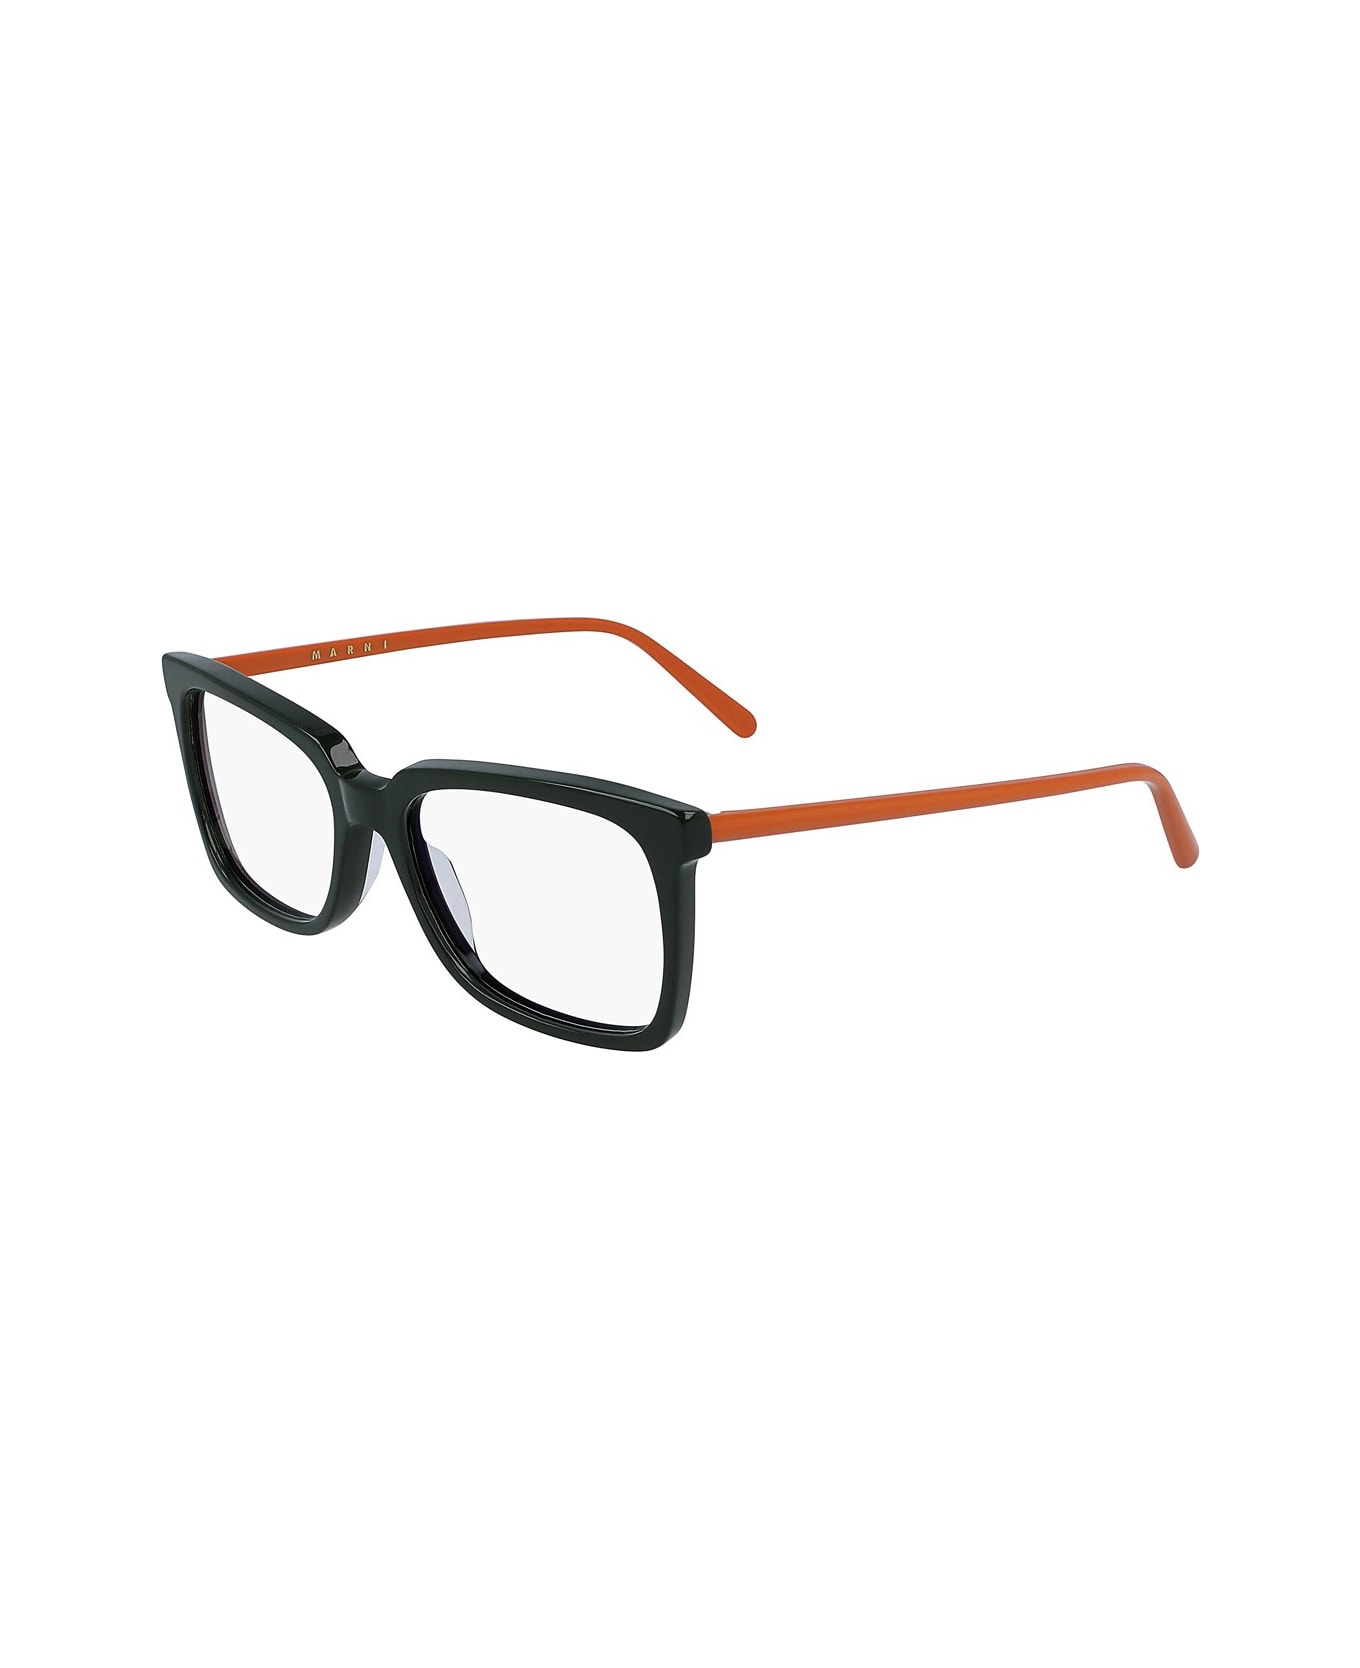 Marni Eyewear Me2630 Glasses - Verde アイウェア